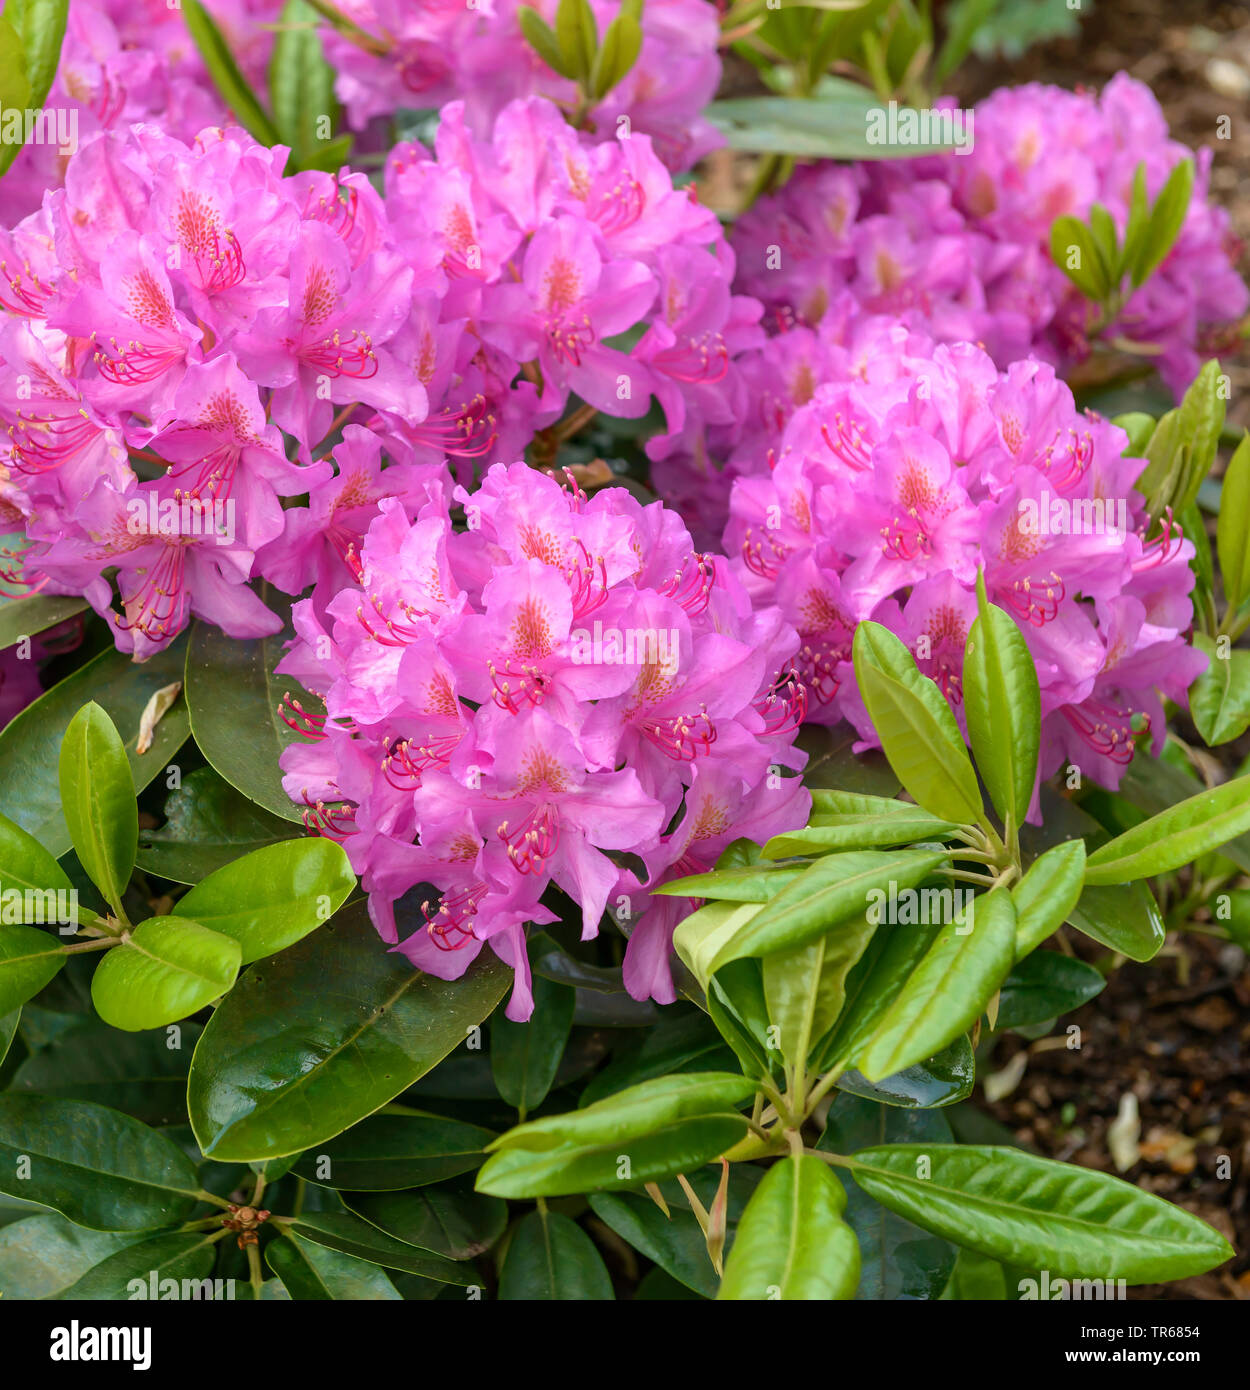 Rhododendron Catawba Catawba, Rose Bay (Rhododendron 'Rosa viola sogno", rododendro rosa sogno viola, Rhododendron catawbiense), fioritura, cultivar rosa sogno viola Foto Stock